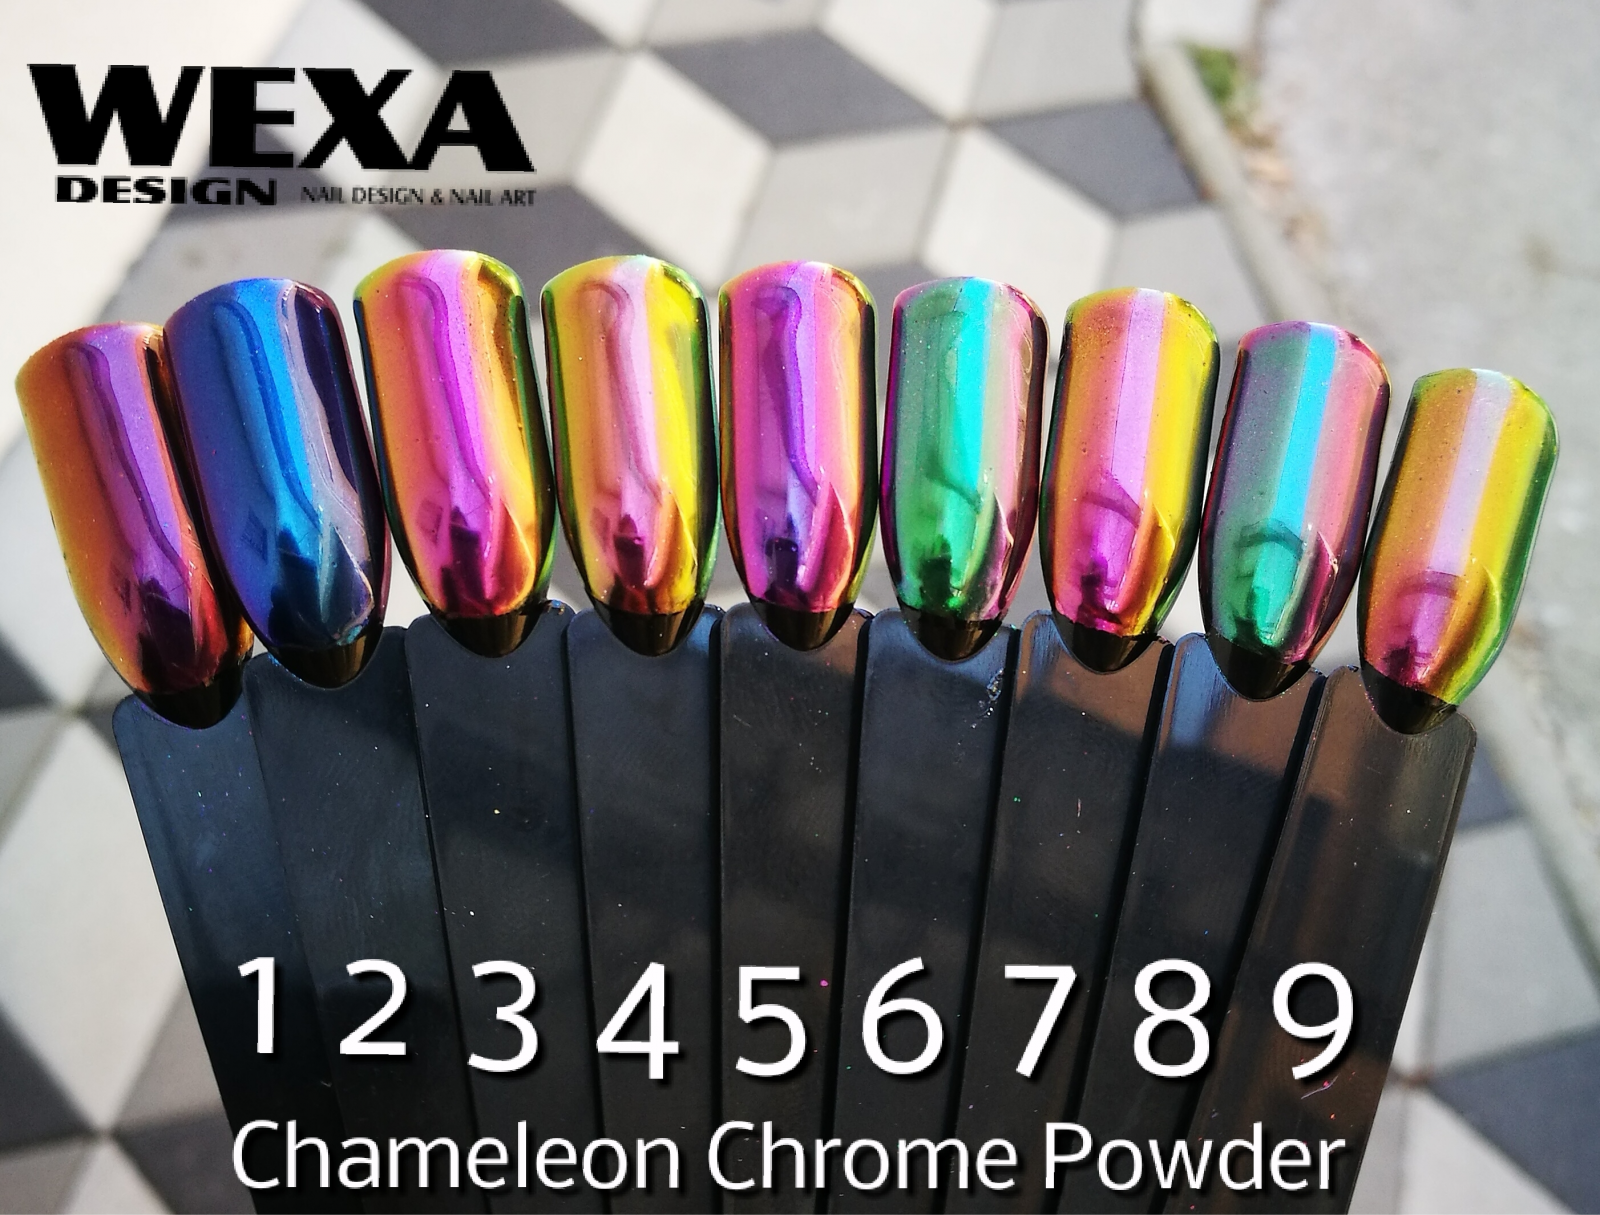 Chameleon Chrome Powder 9